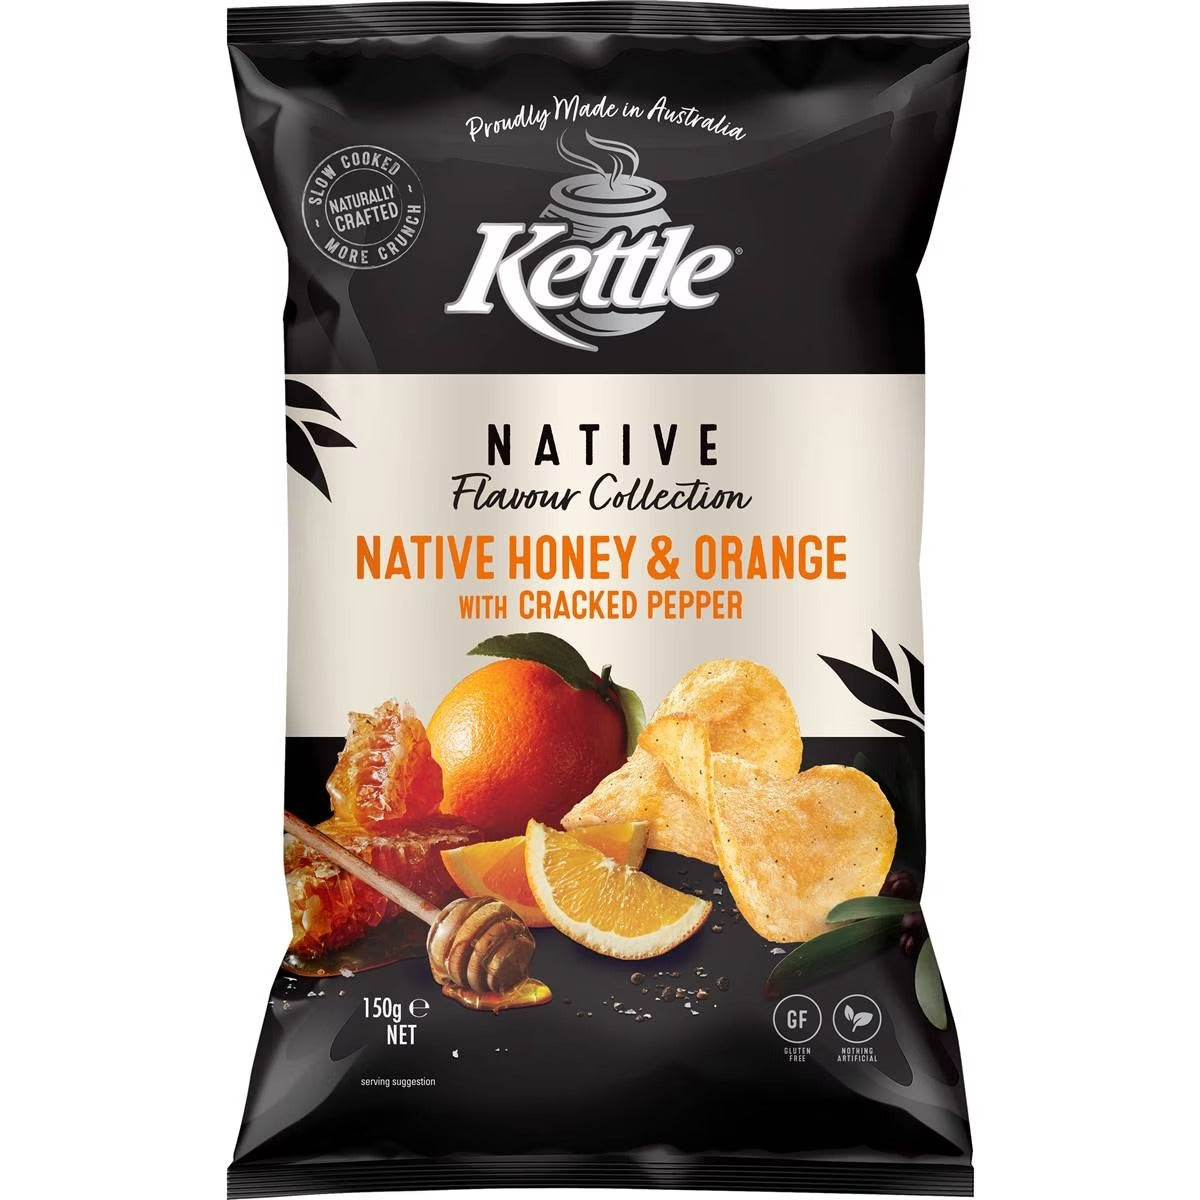 Kettle Native Honey & Orange with Cracked Pepper 150g